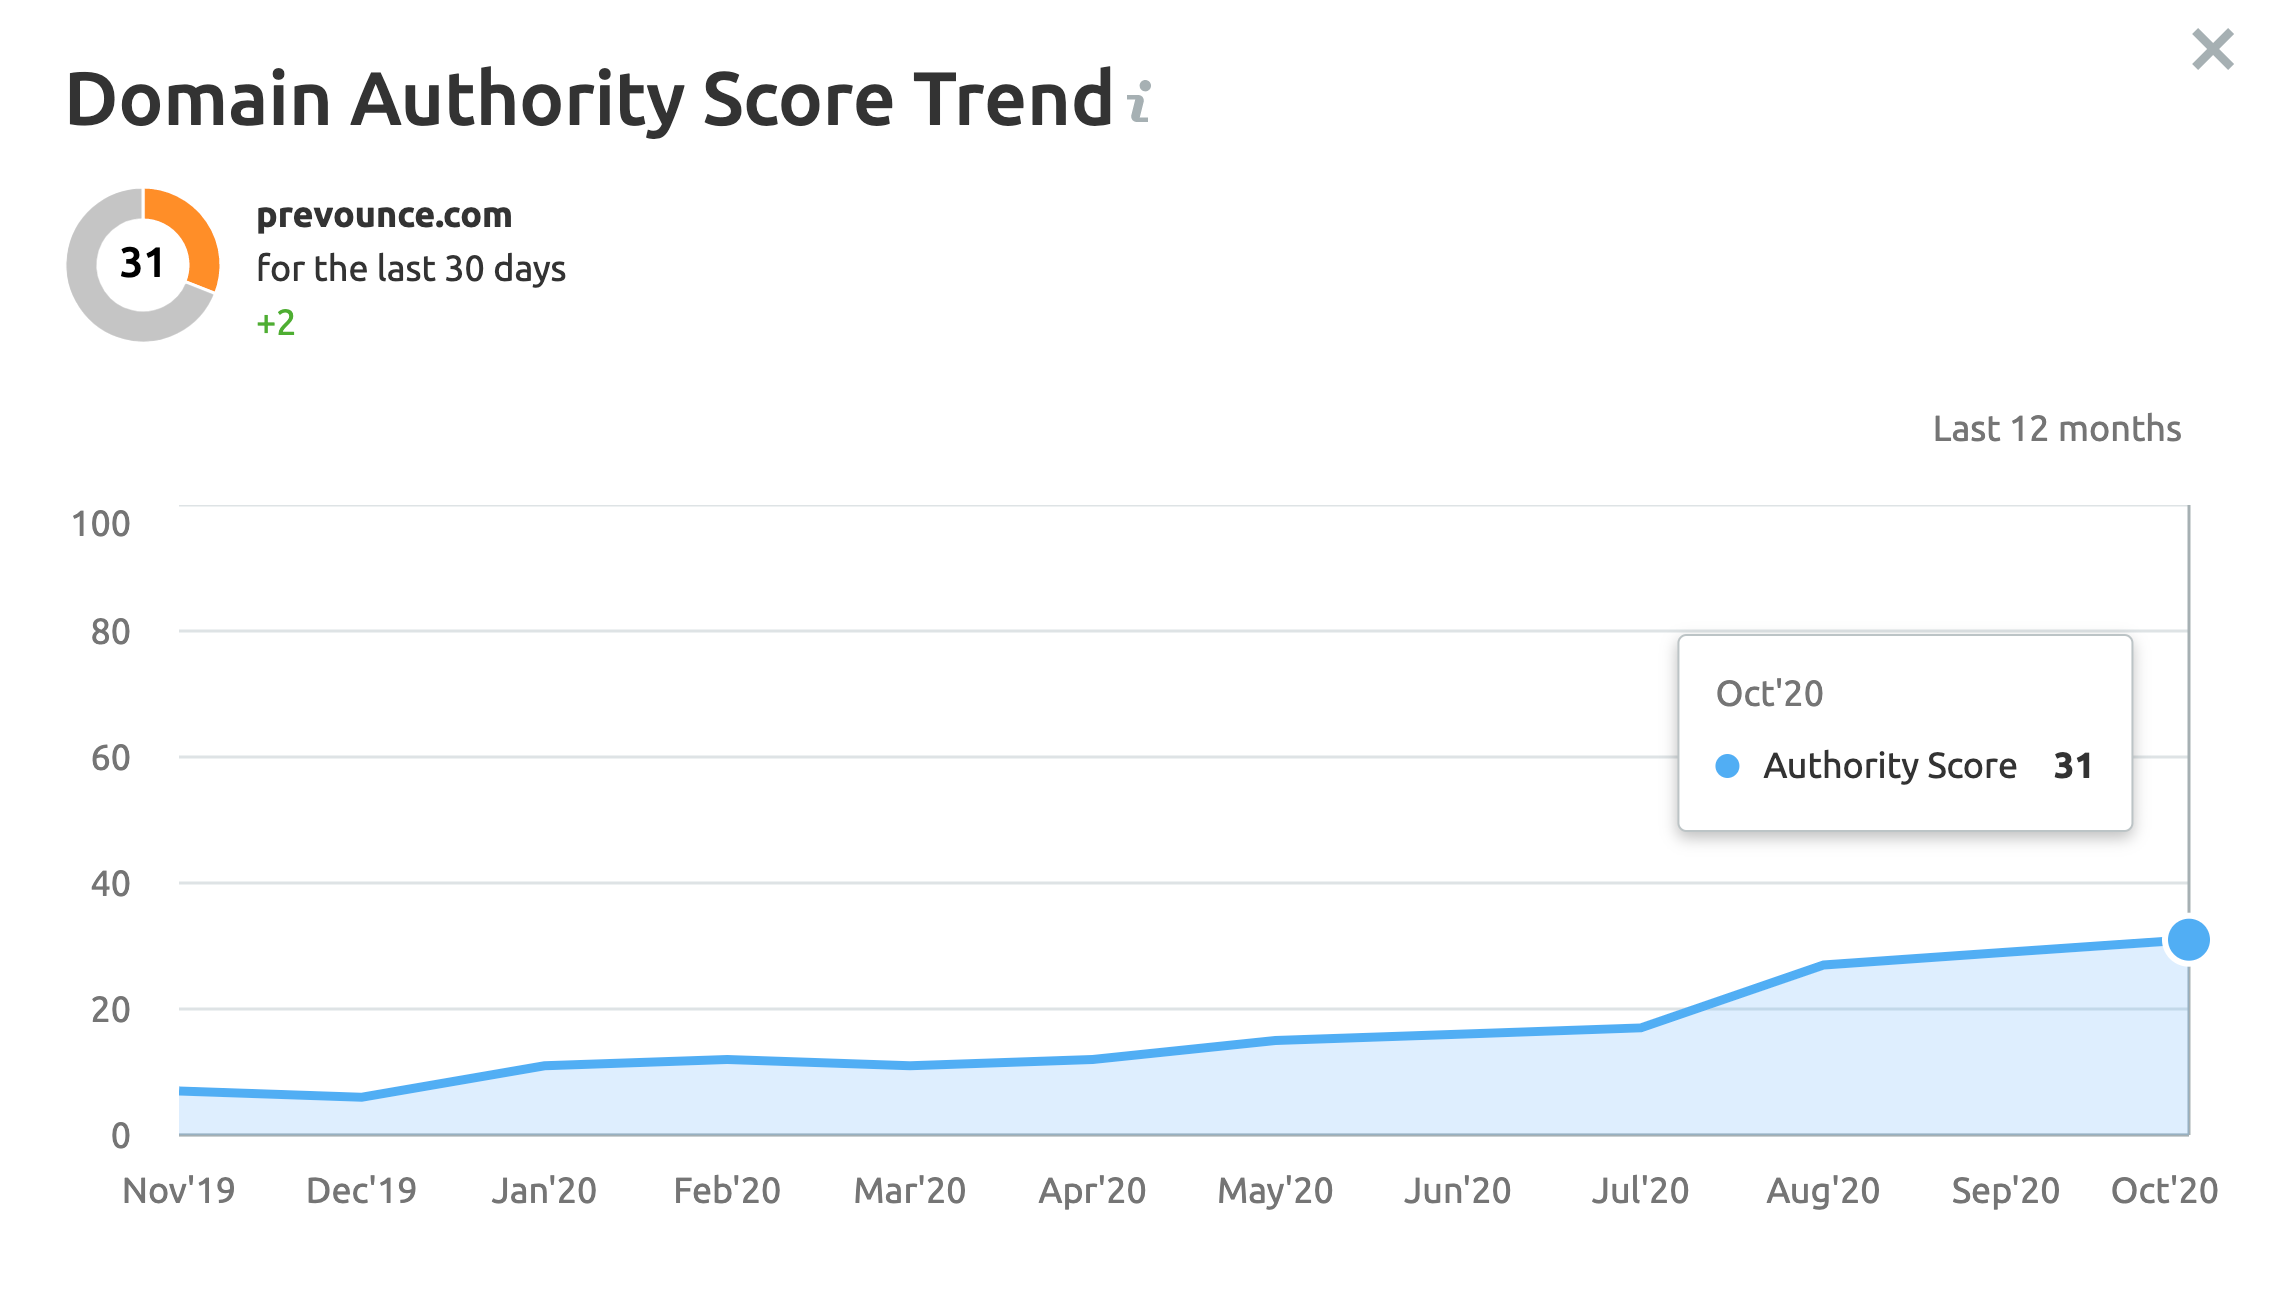 Domain authority score trending upward